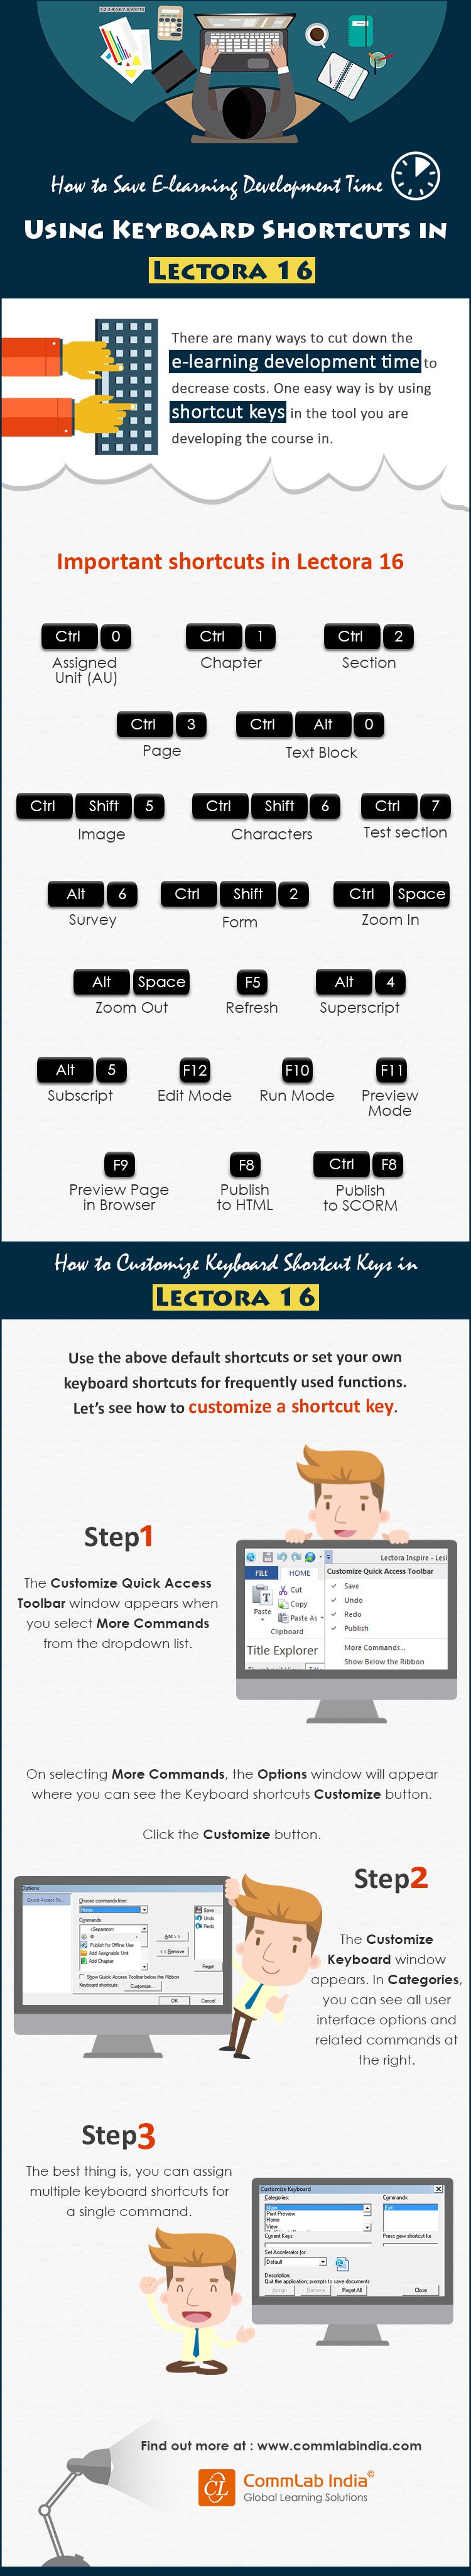 Keyboard Shortcuts in Lectora Inspire 16